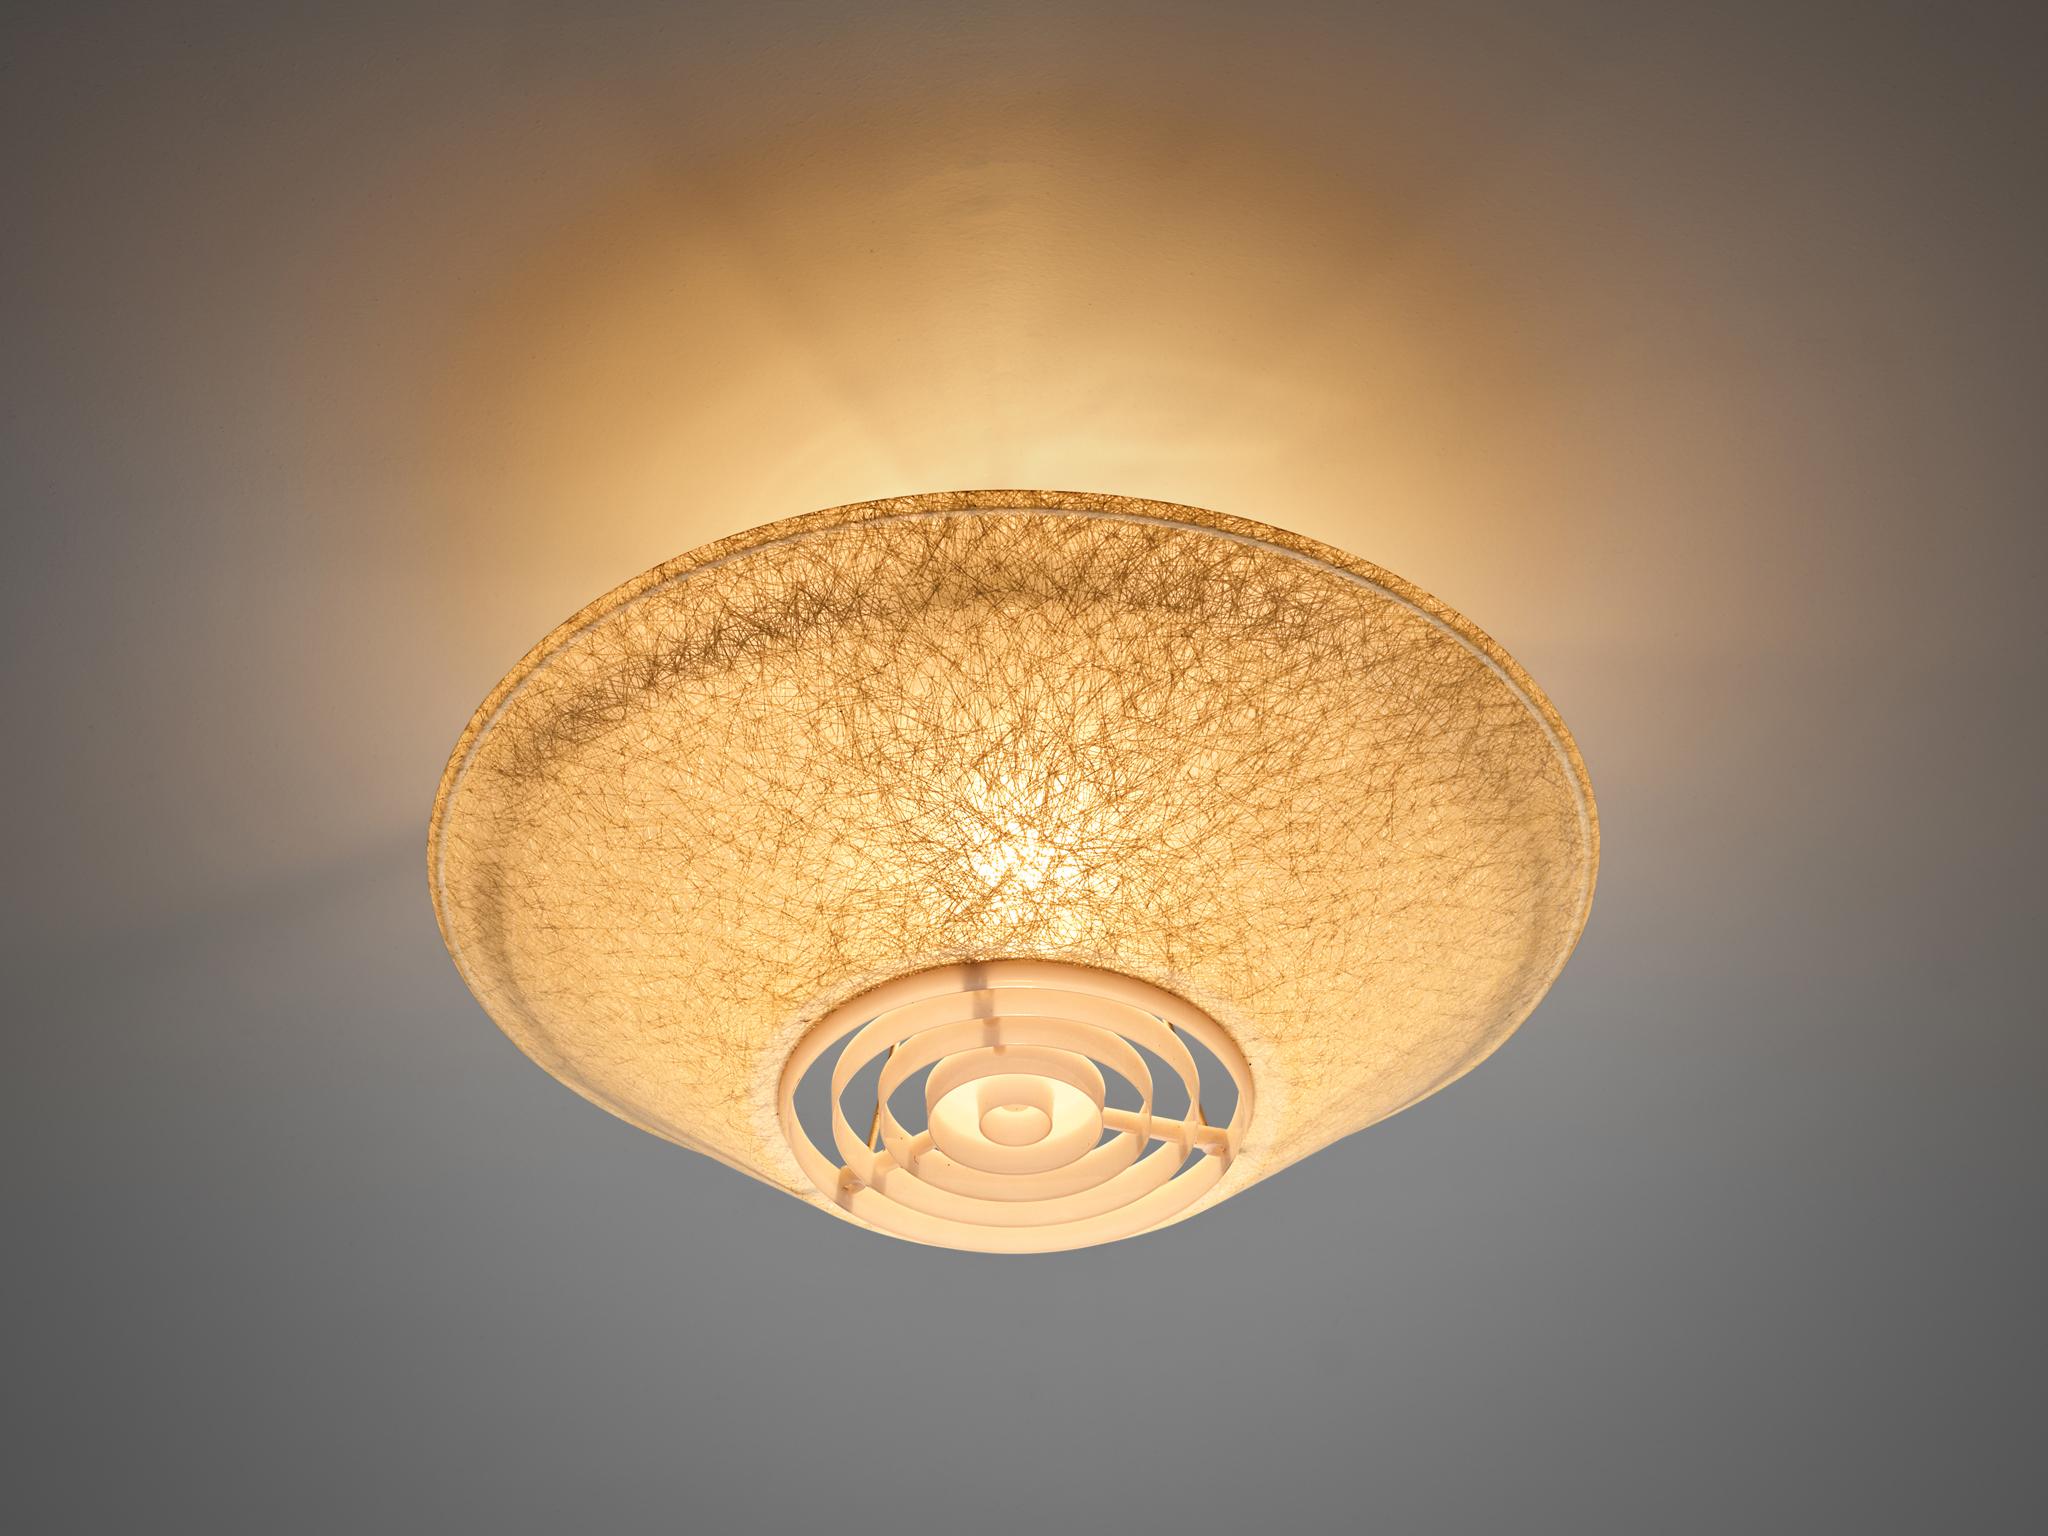 fiberglass lamp shade material